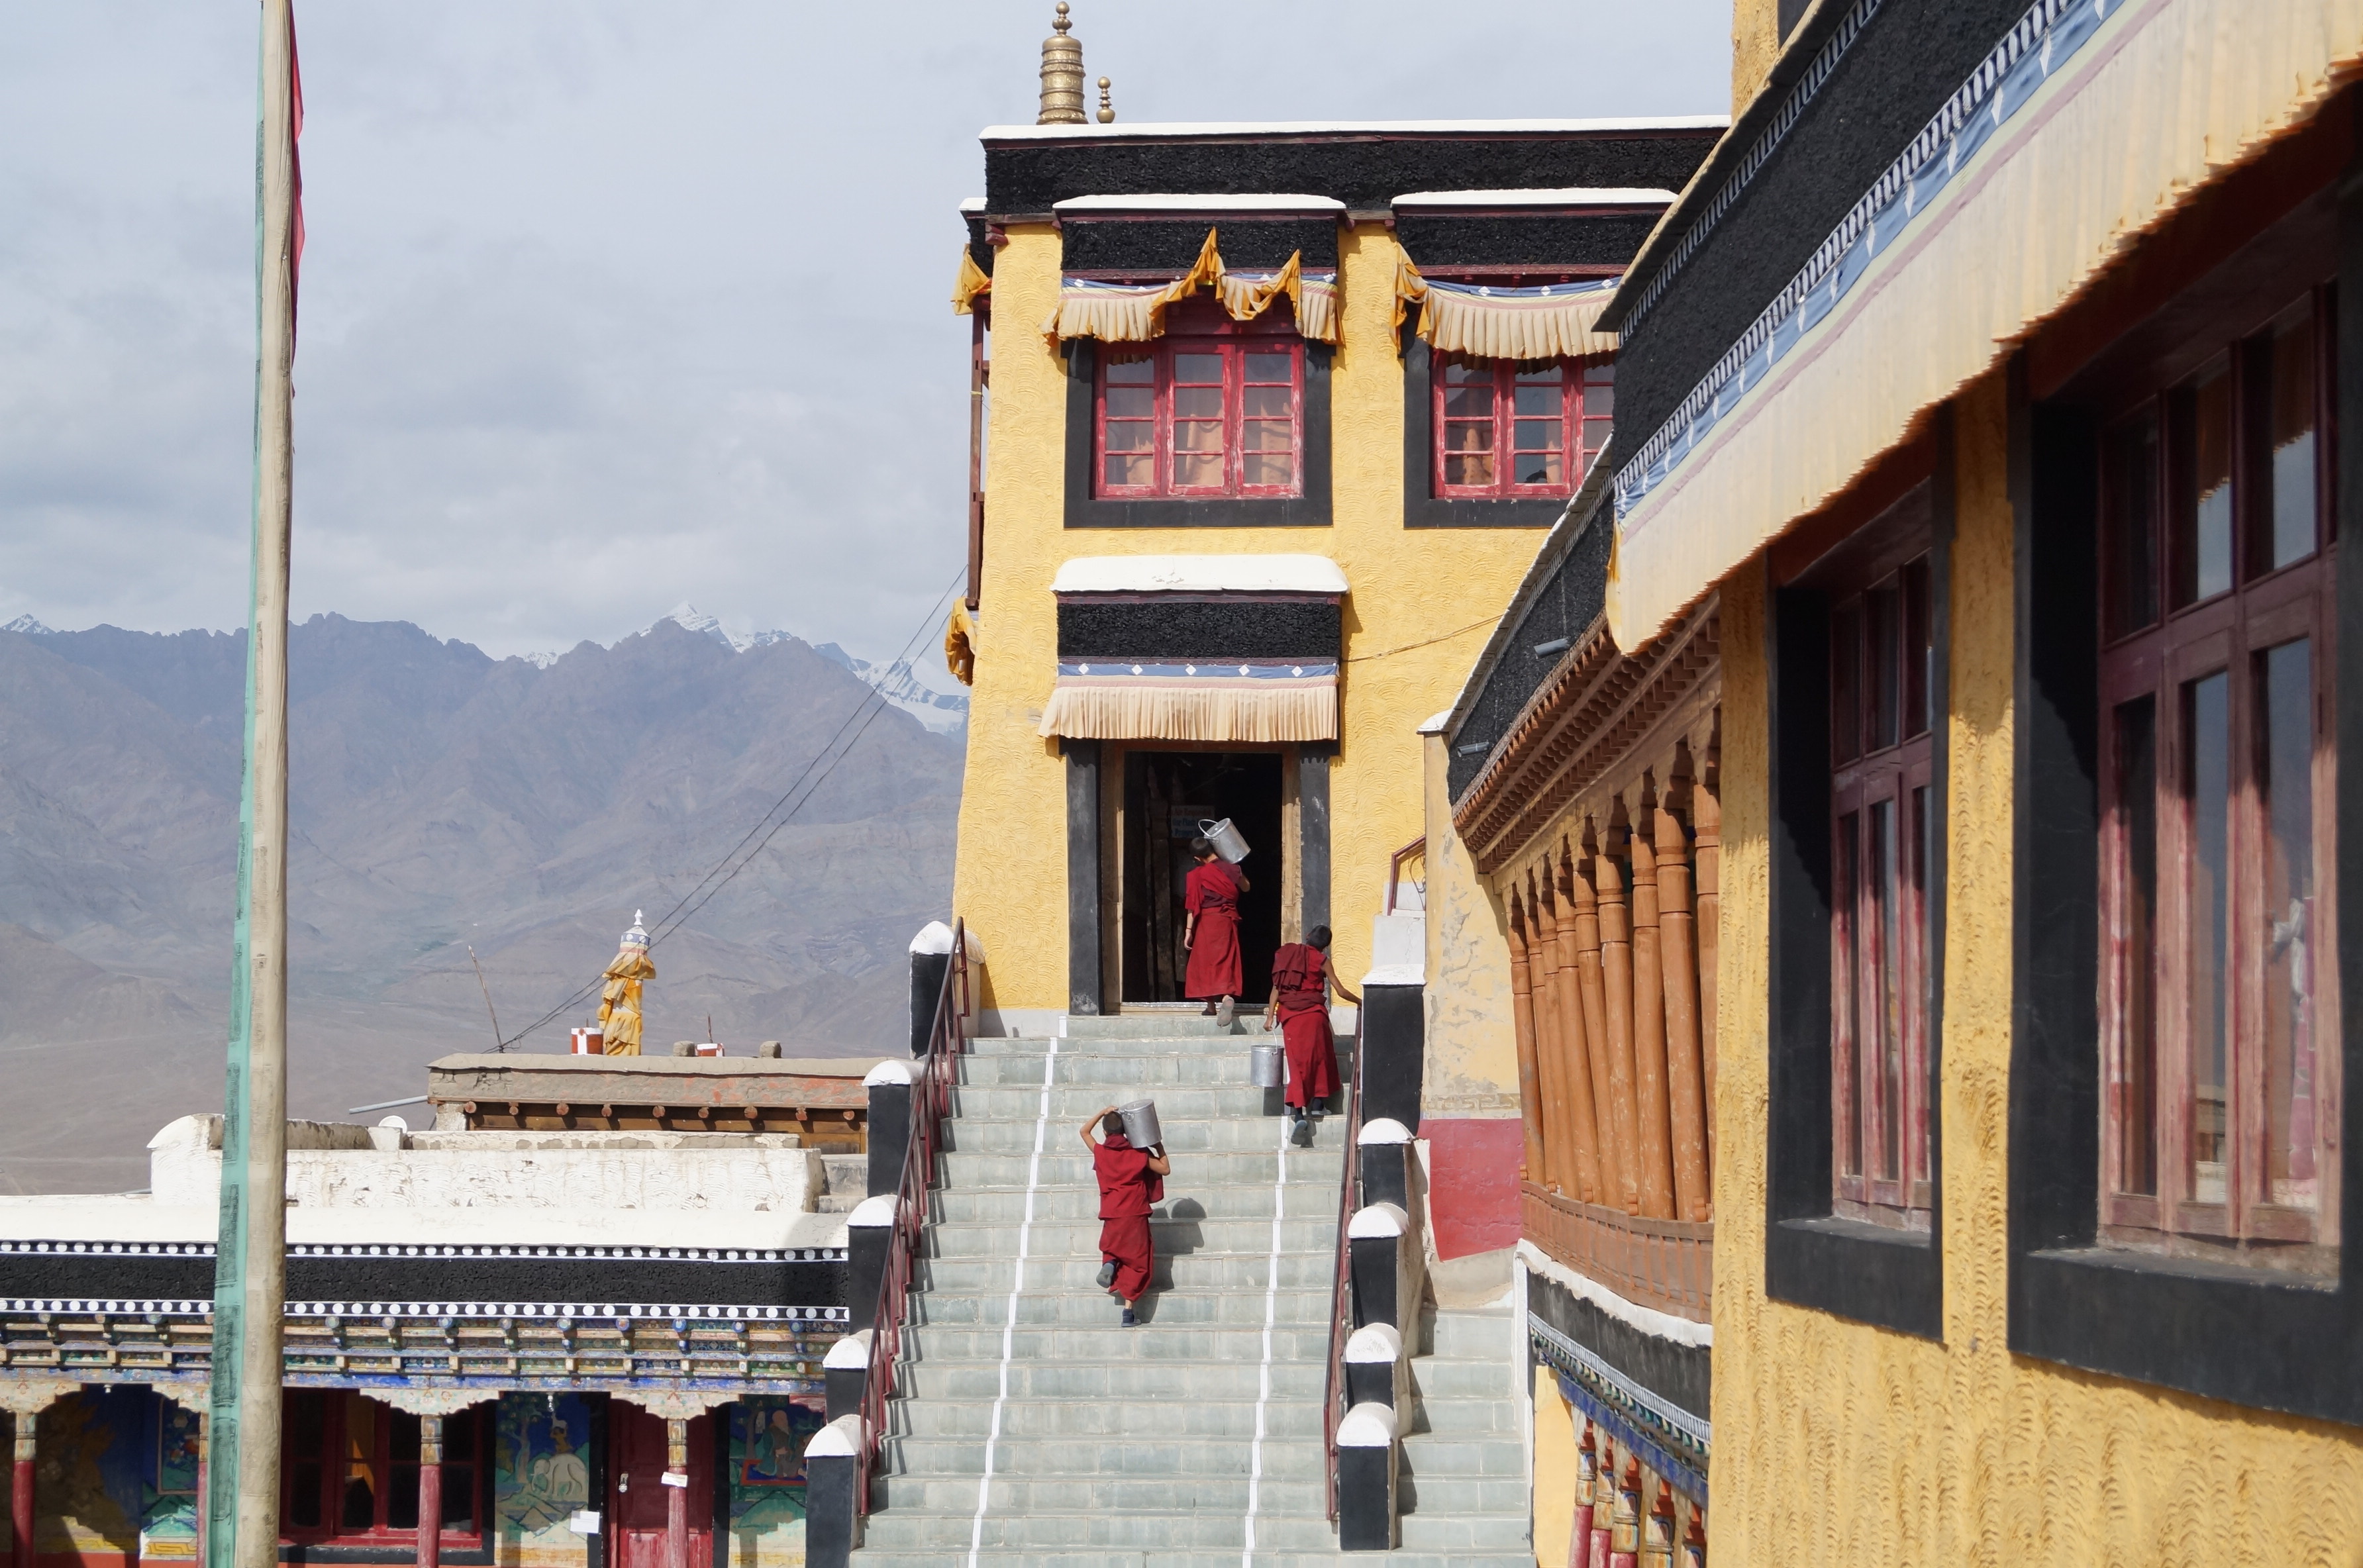 Entre monasterios tibetanos en Ladakh, India/Among Tibetan monasteries in Ladakh, India